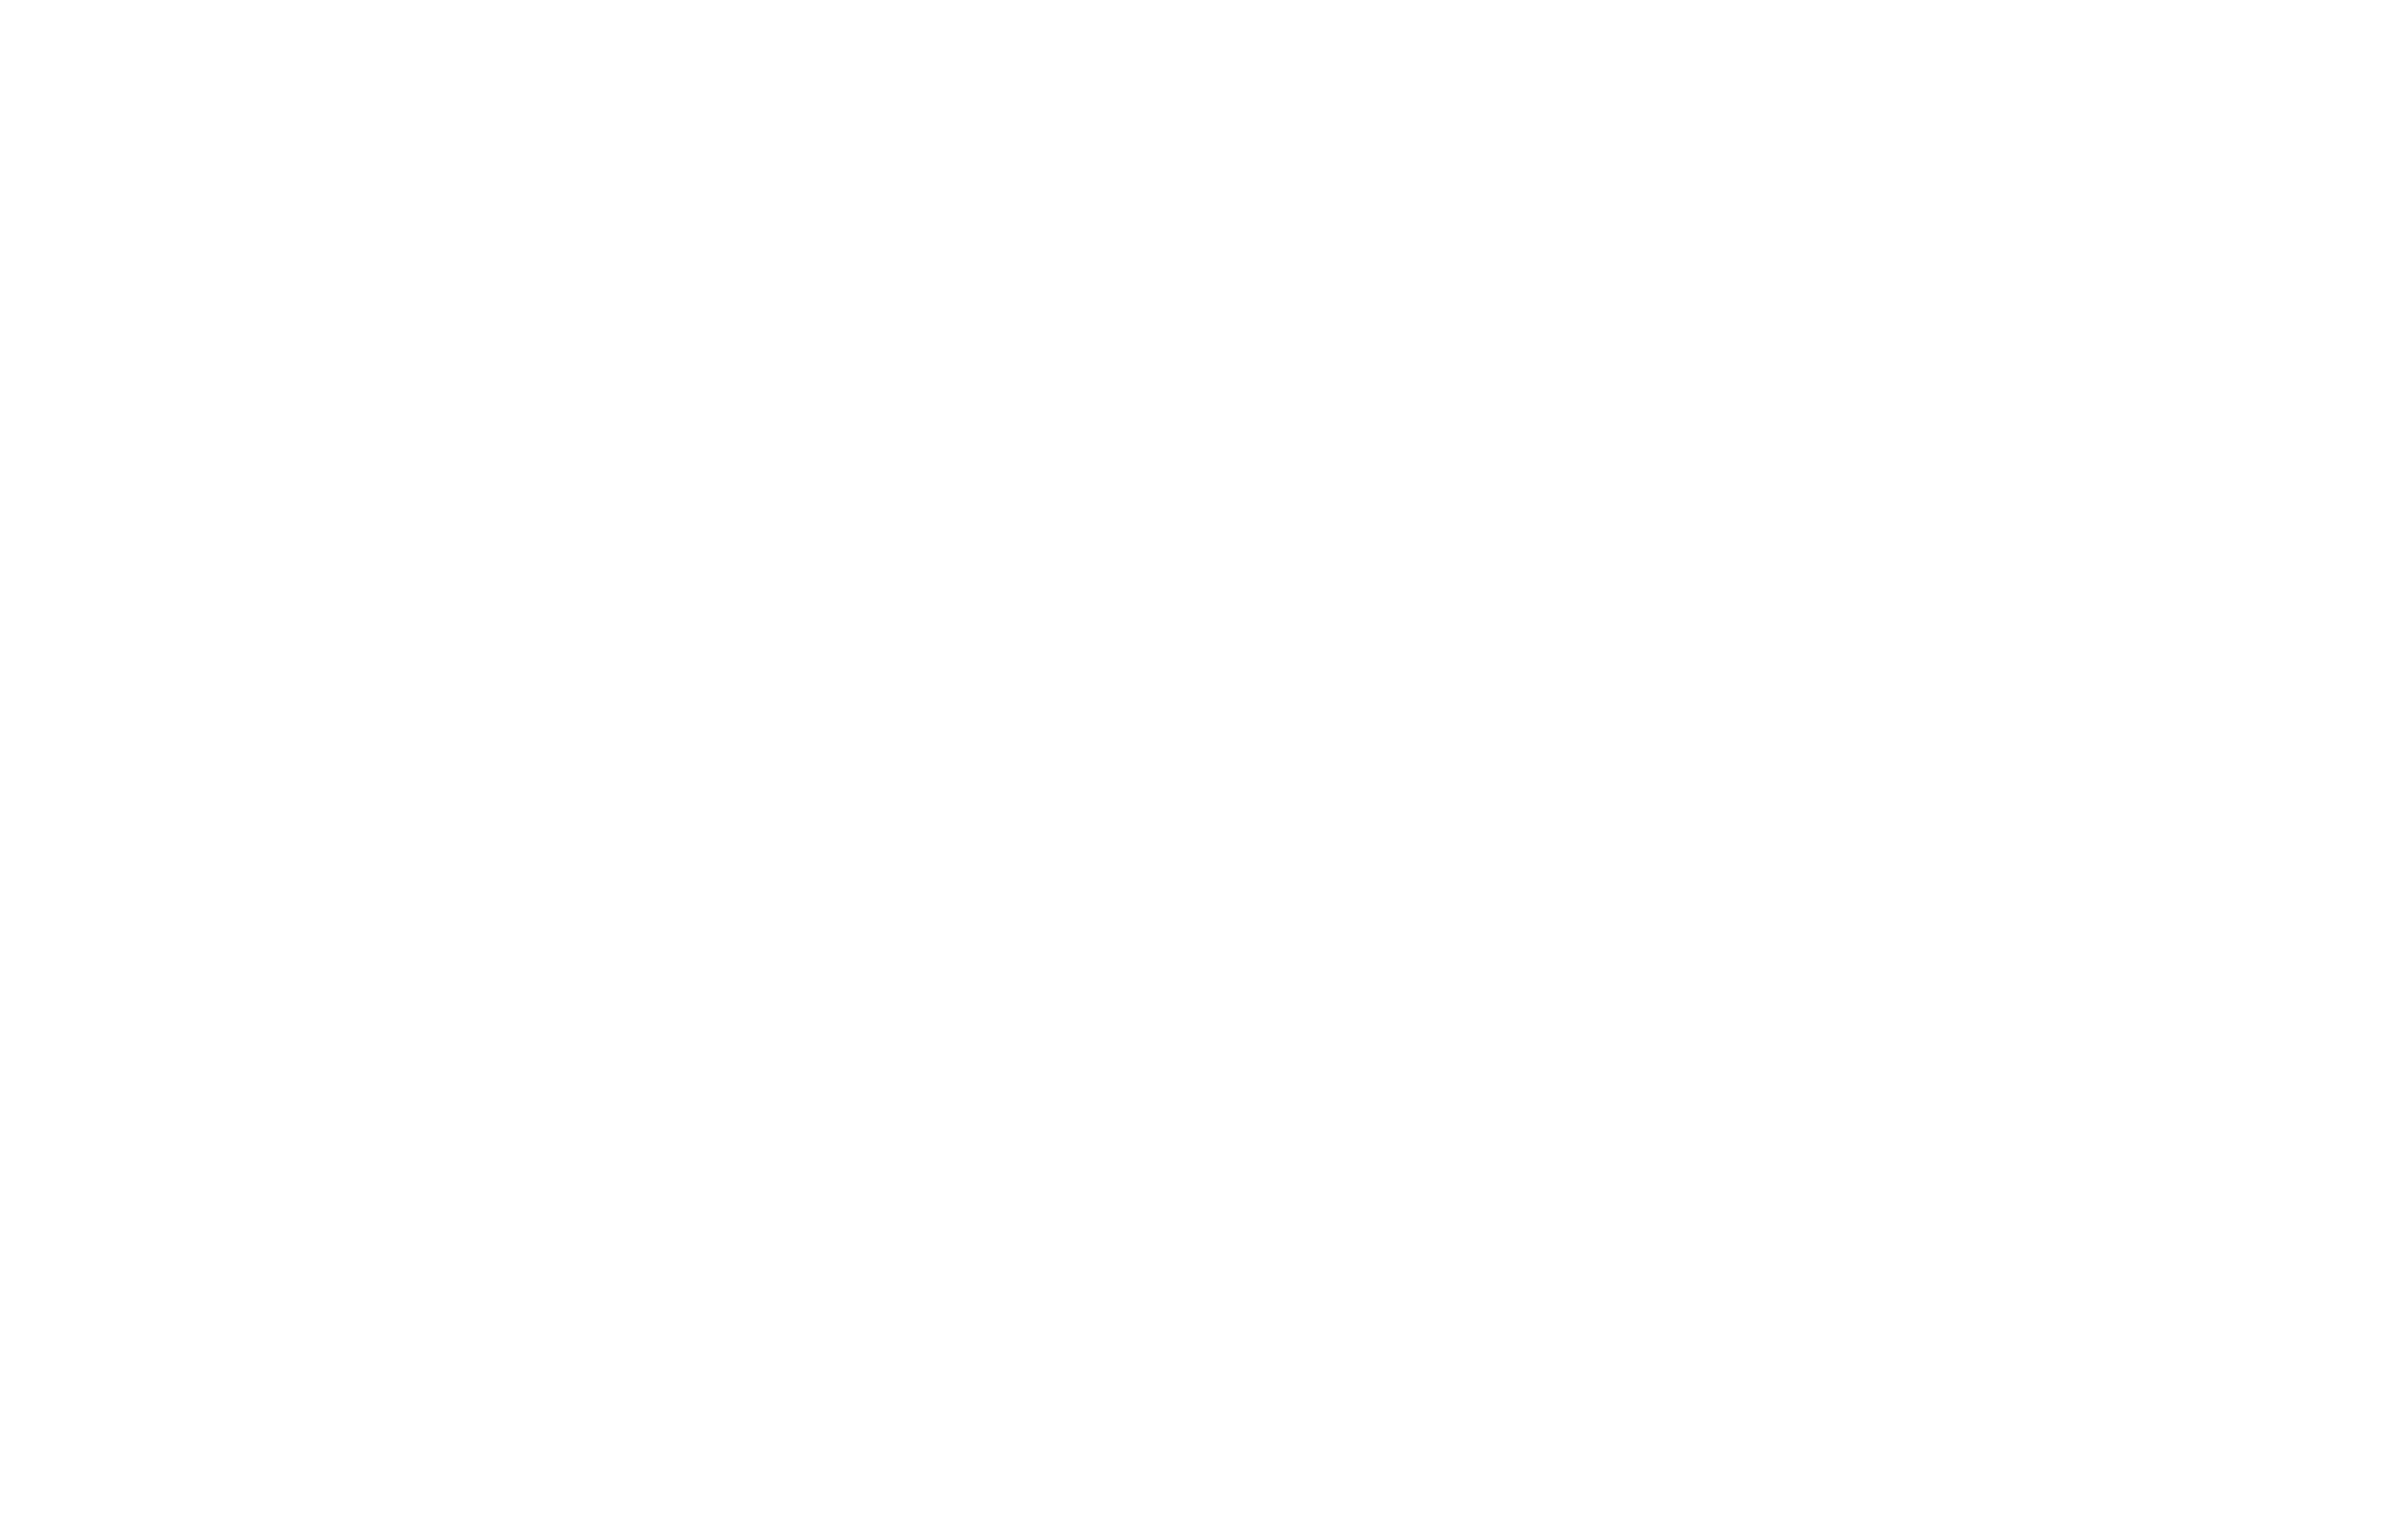 Prairie records